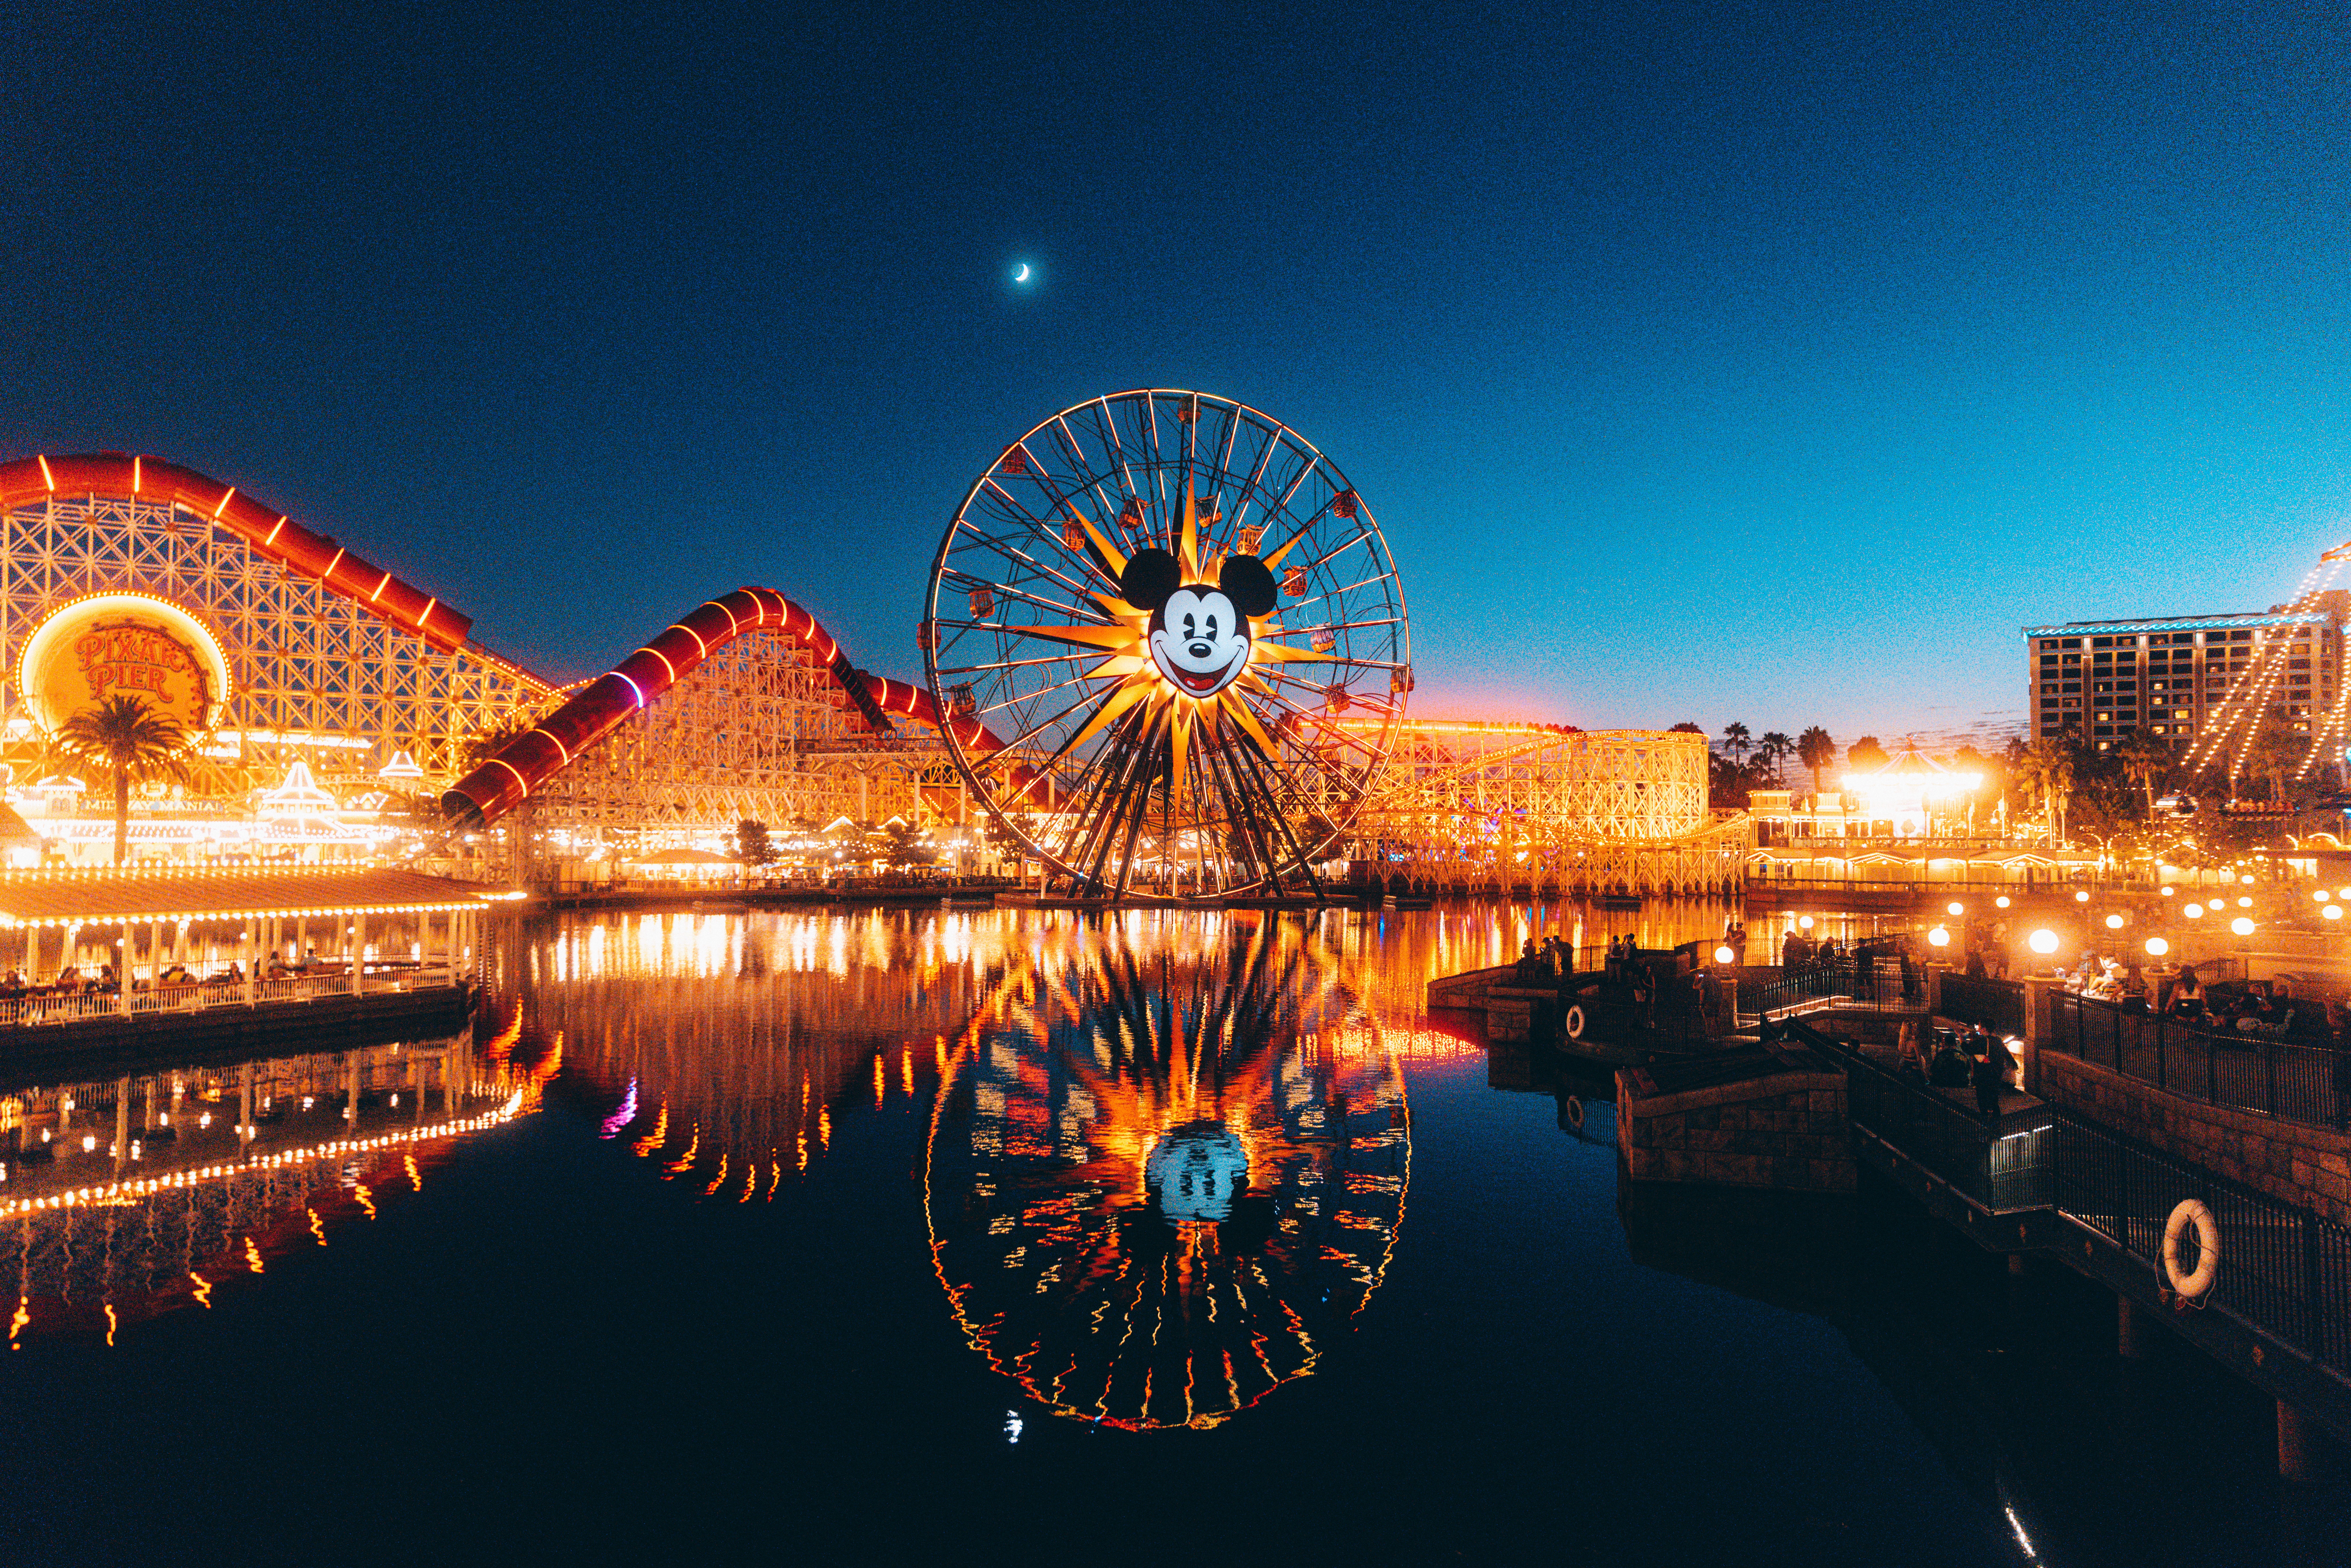 🏰 Planning a trip to Disneyland